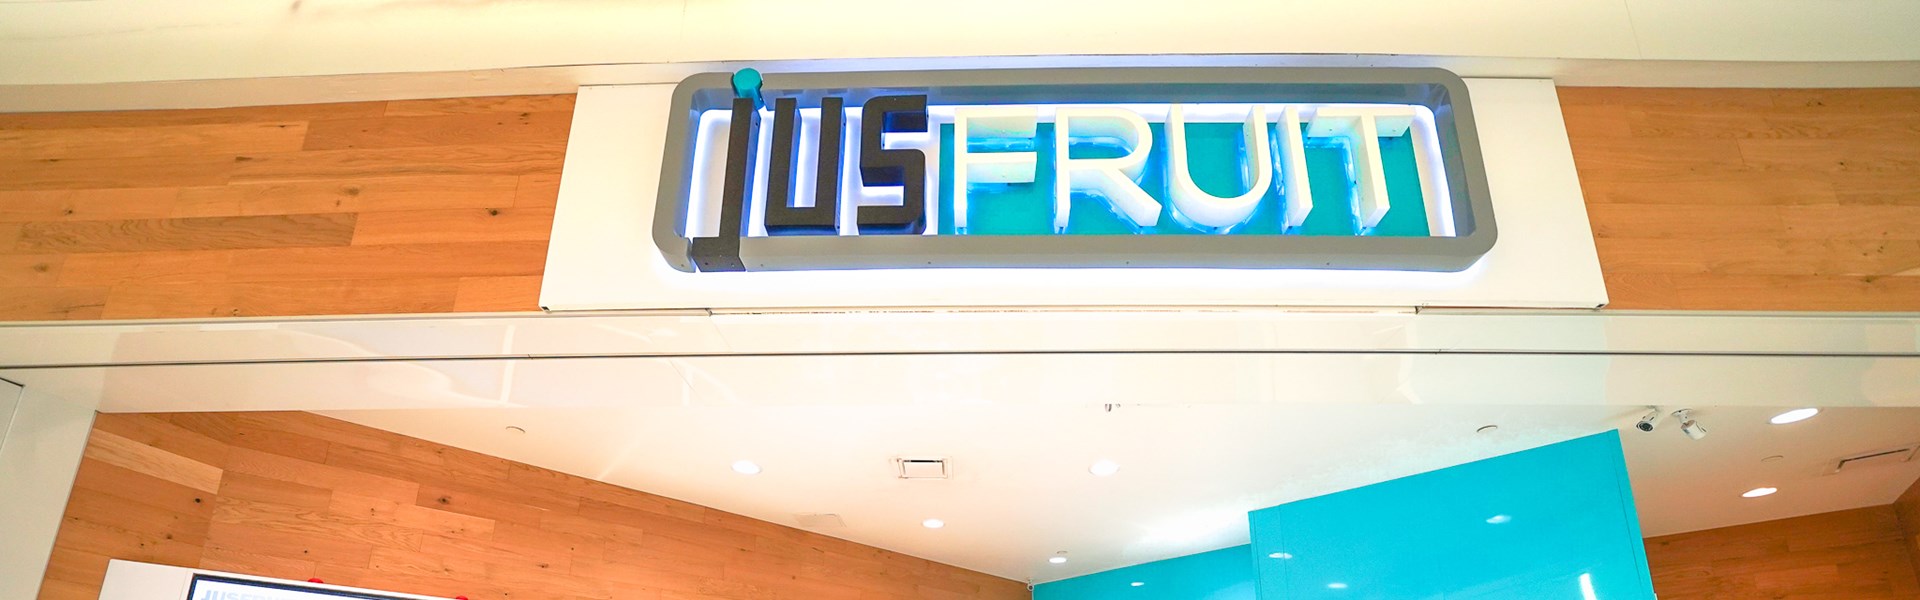 Jus Fruit